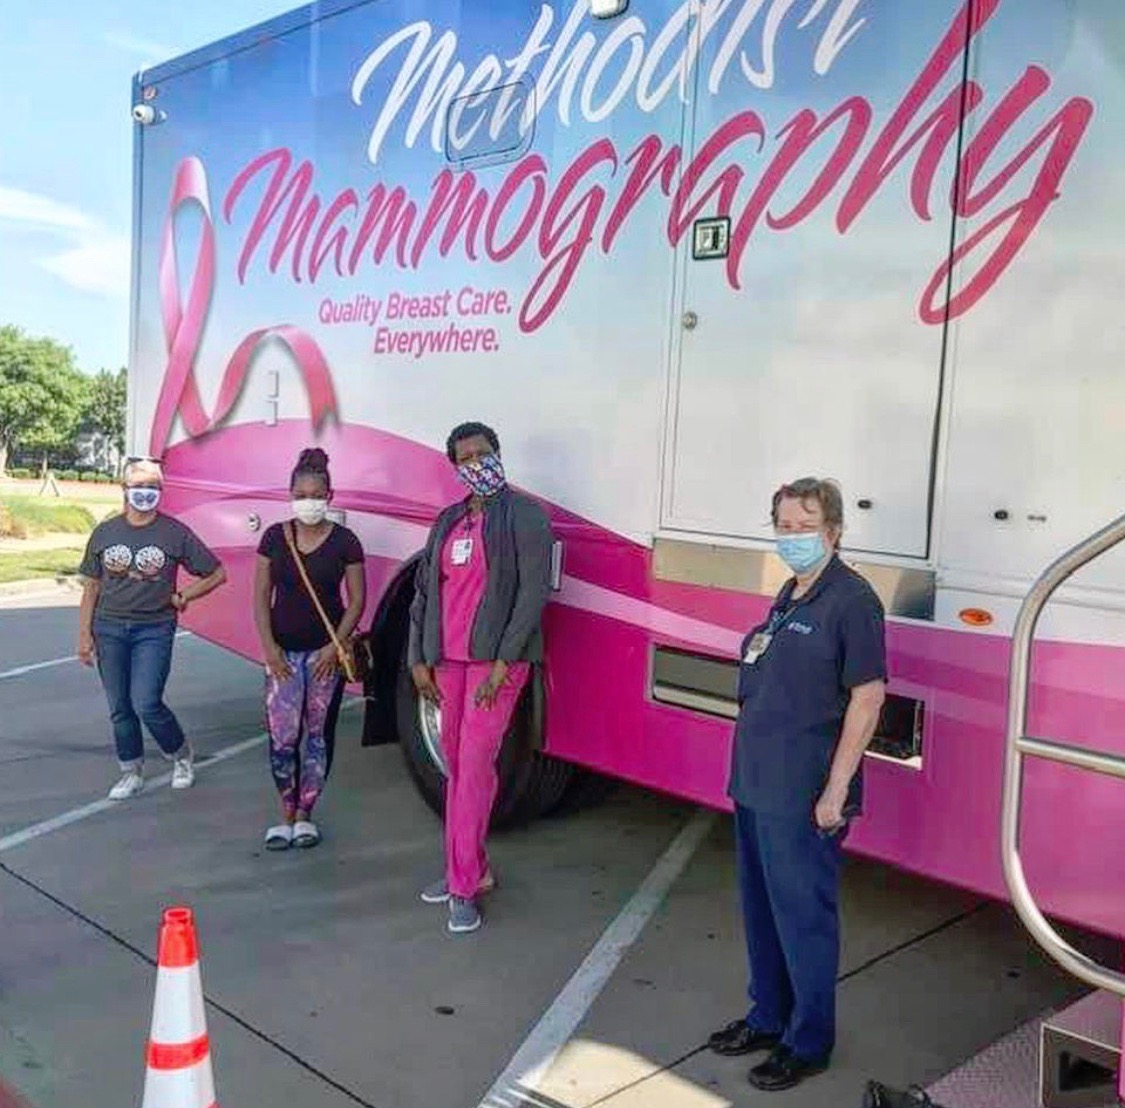 Mammogram Exams Coming to the Neighborhood